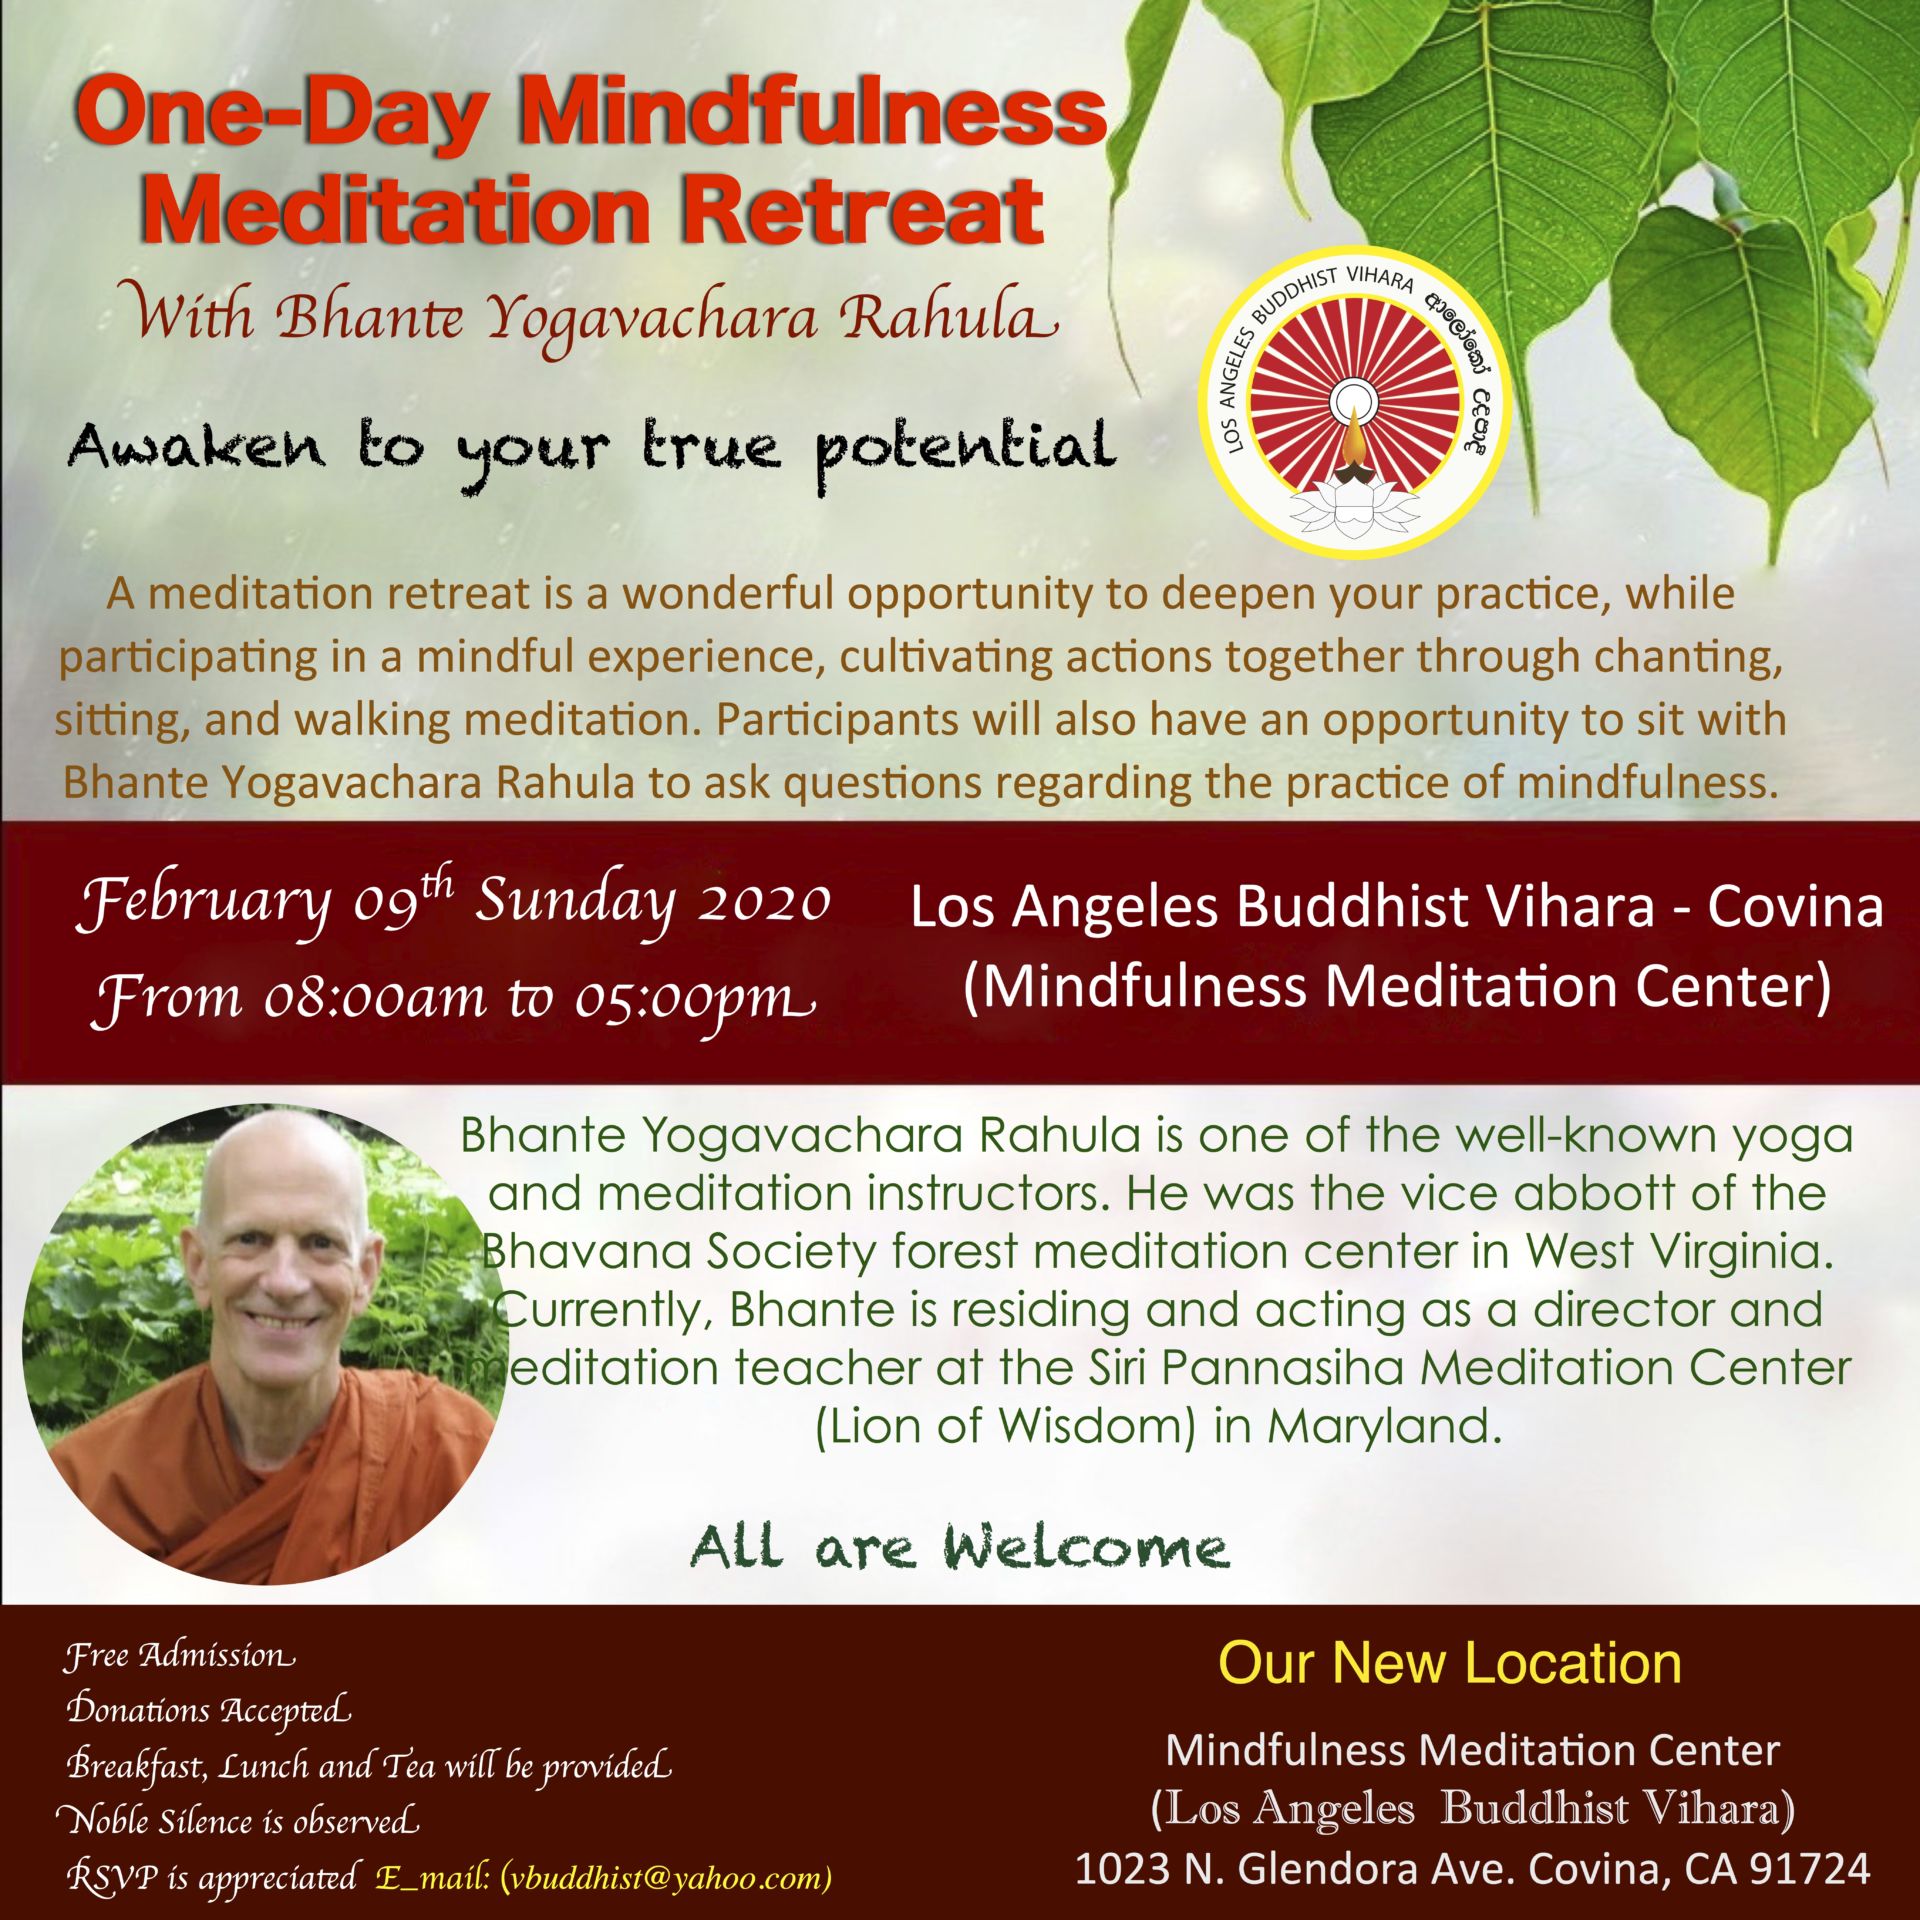 One-Day Mindfulness Meditation Retreat